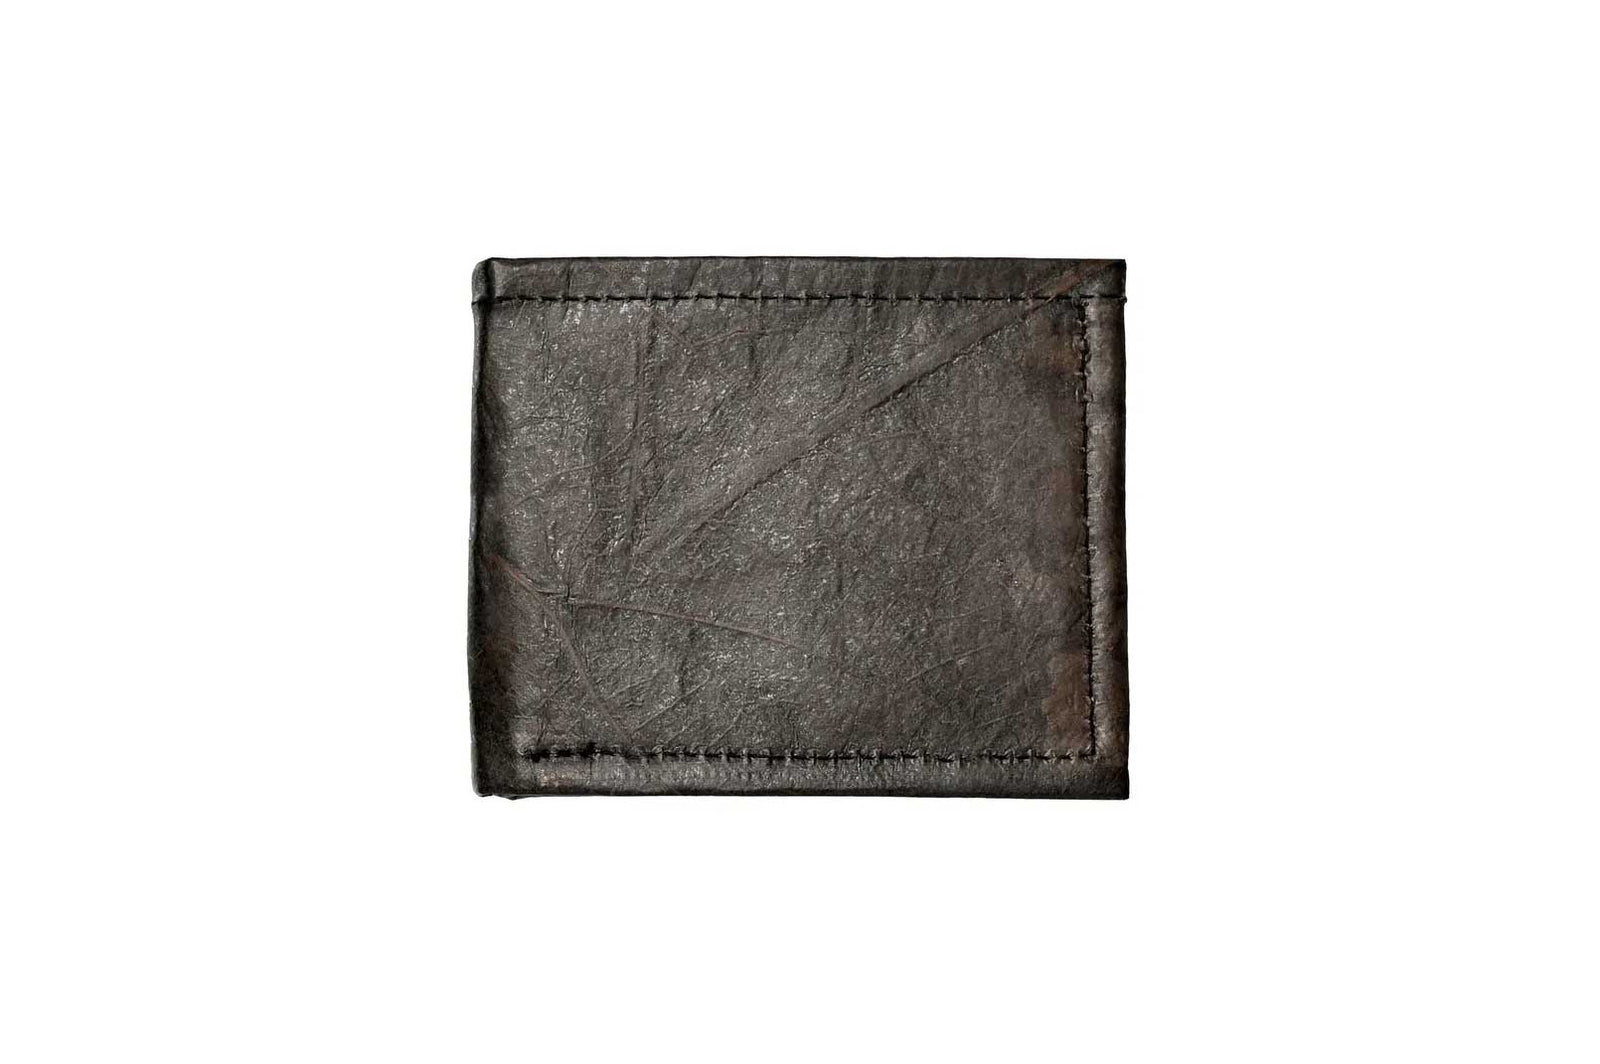 Black Wallet with Coin Purse-Karuna Dawn-stride